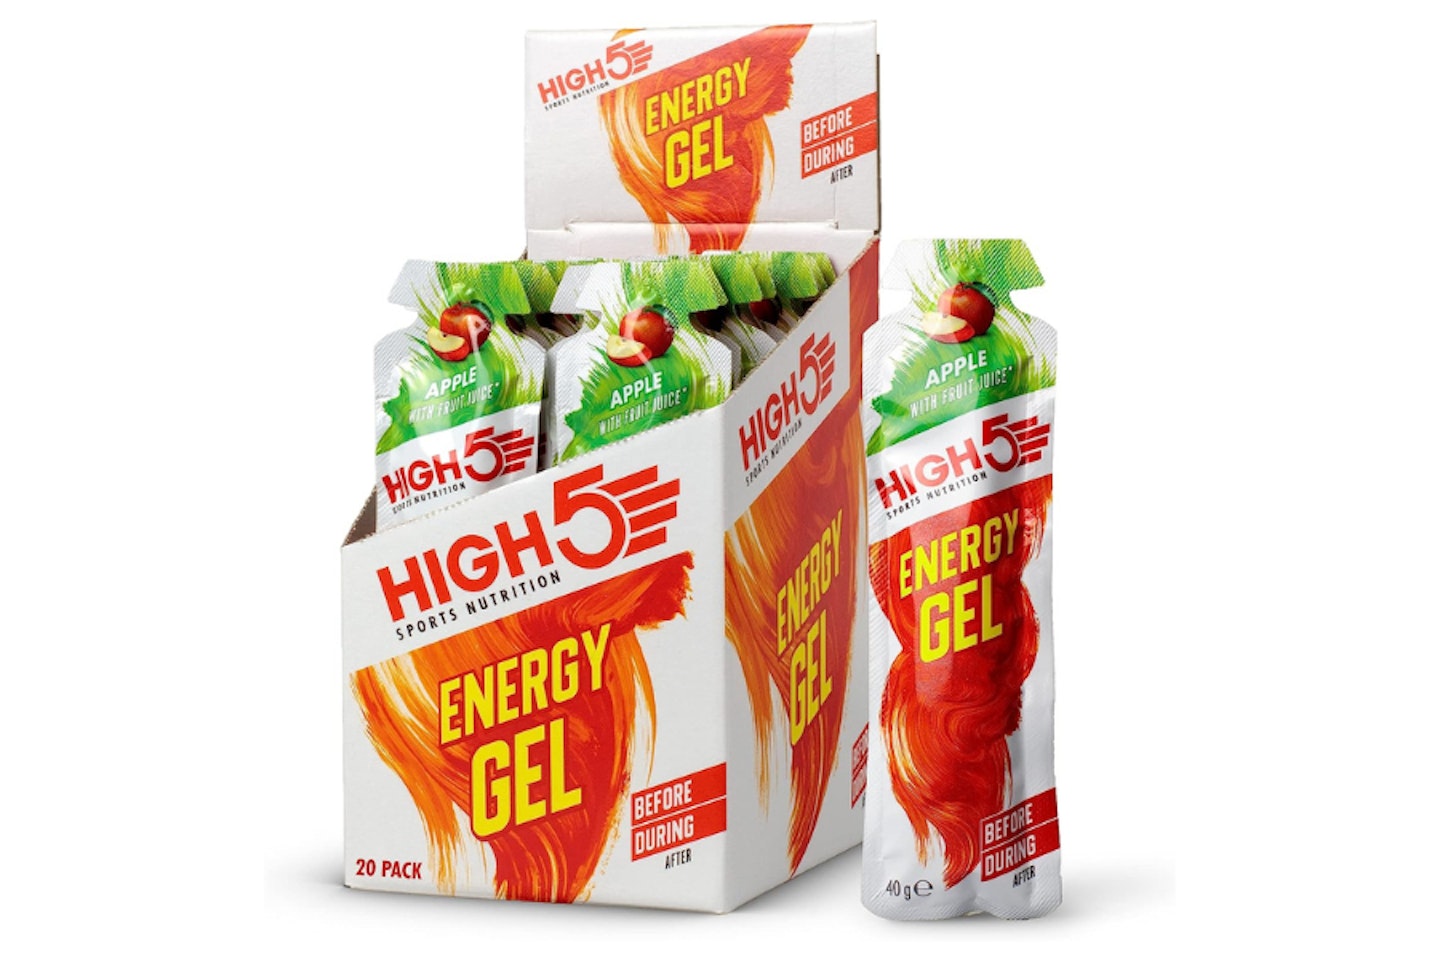 HIGH5 Energy Gel Quick Release Energy